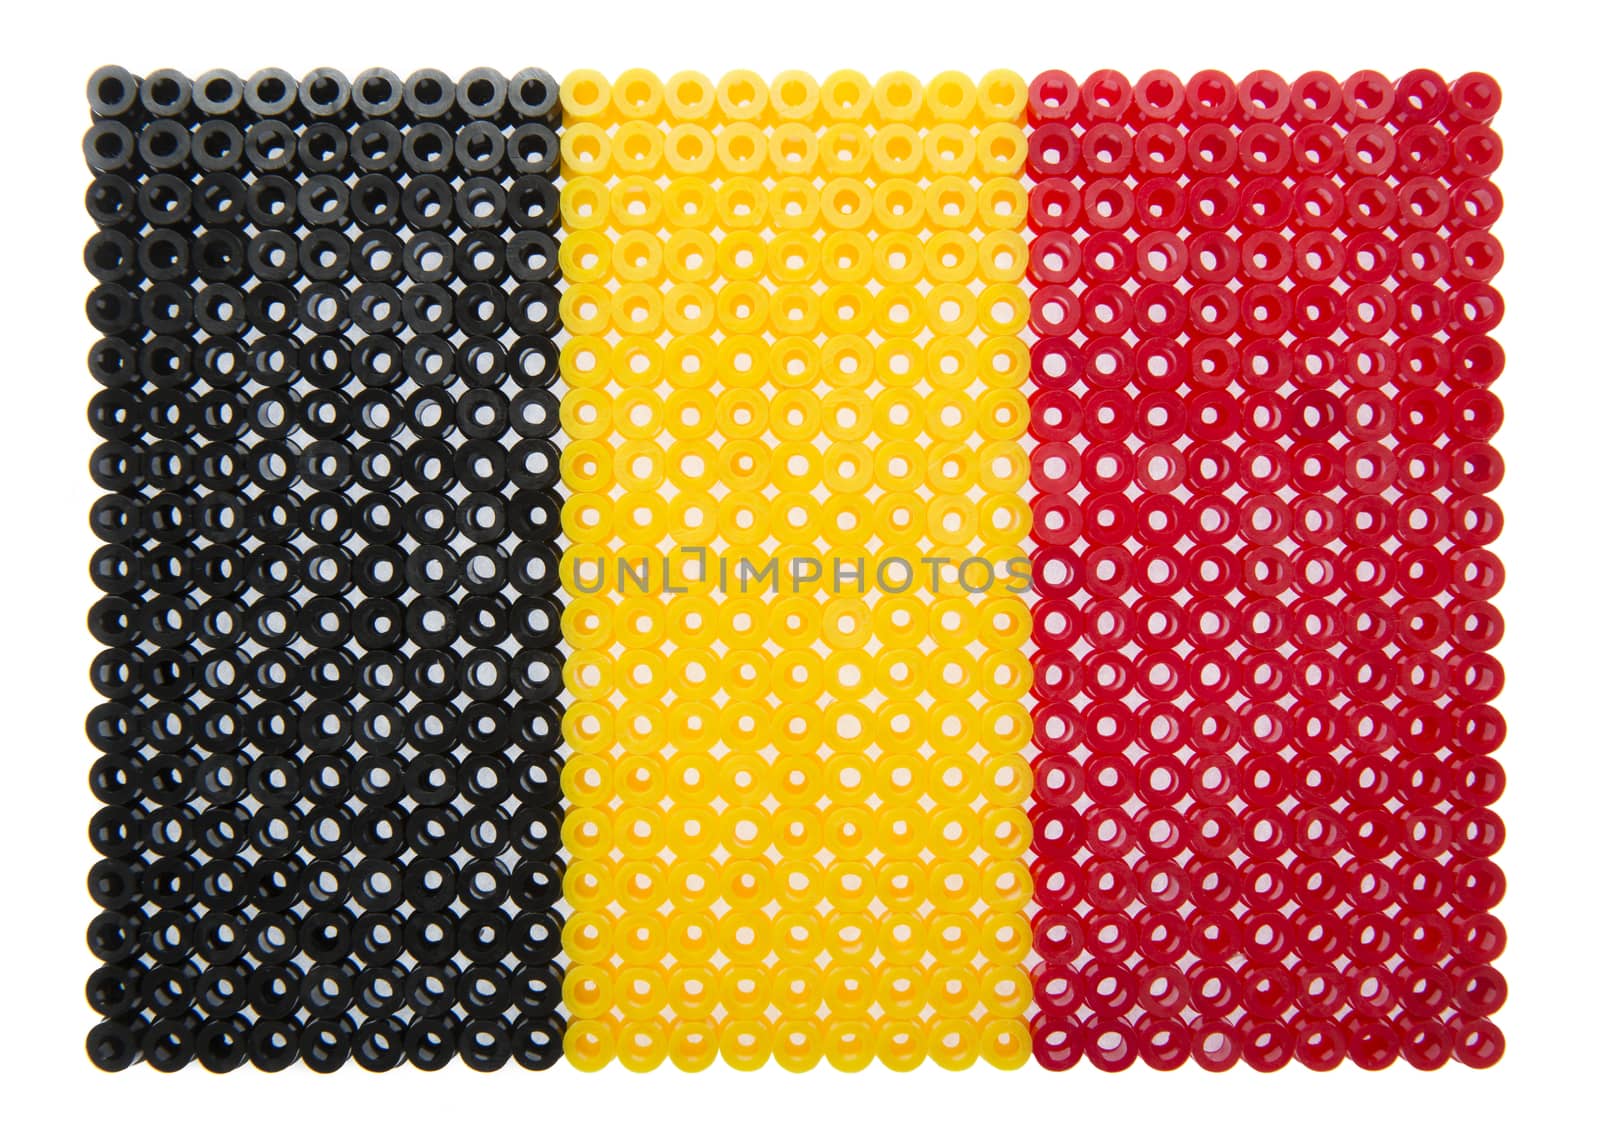 Belgian Flag made of plastic pearls